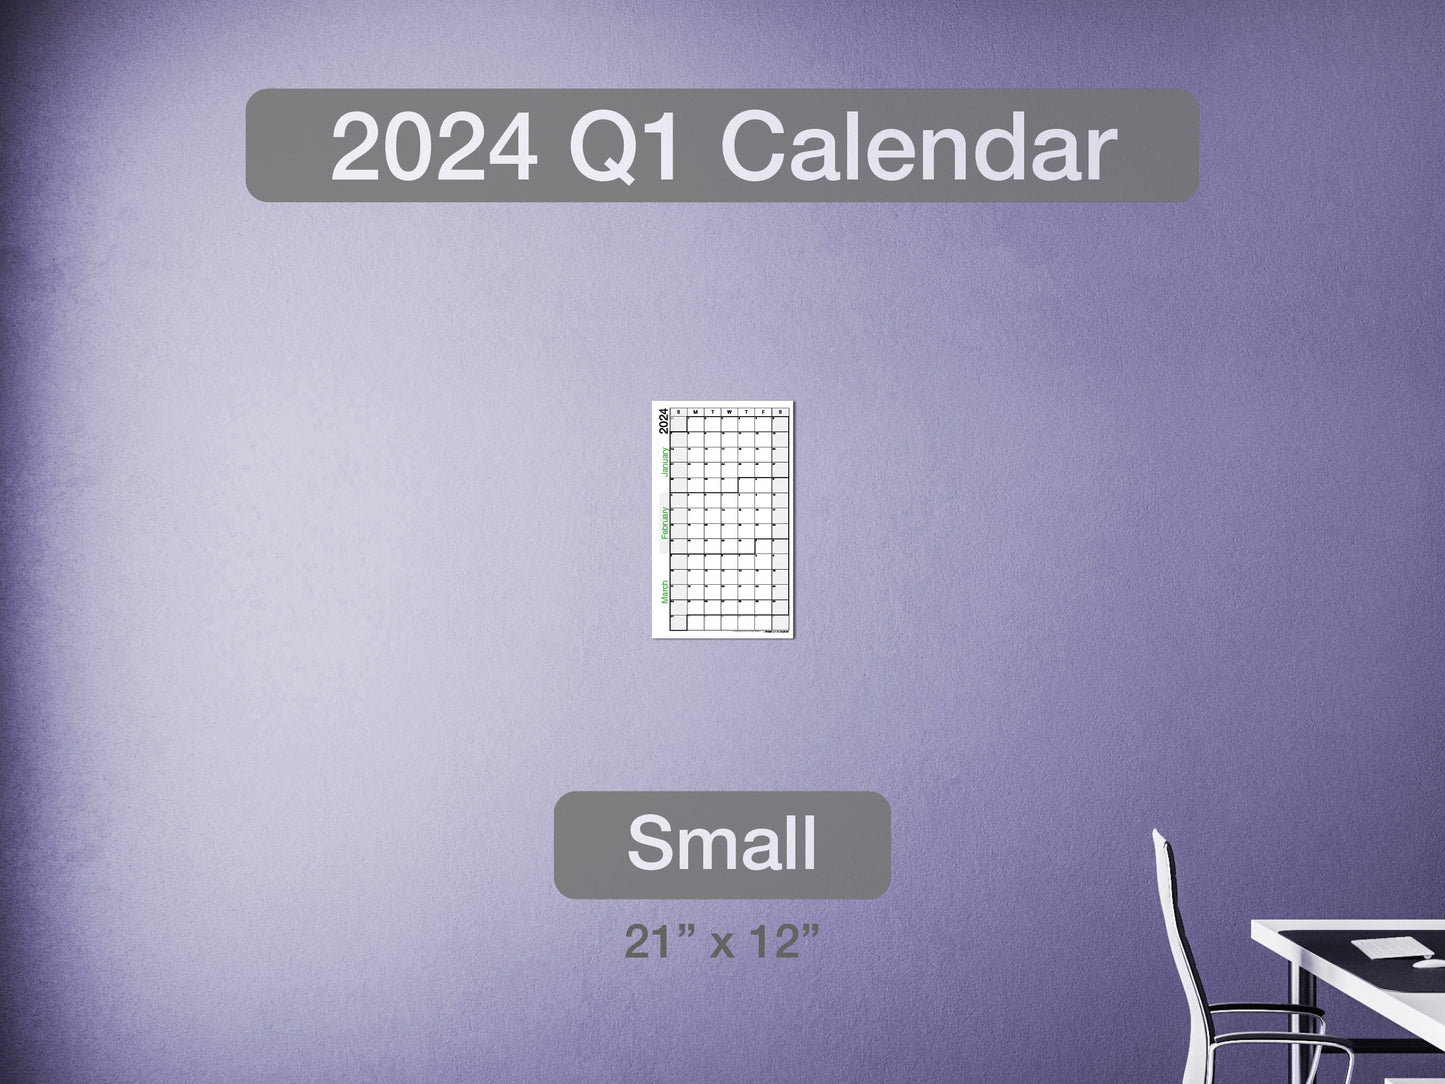 2024 Q1 Calendar Small